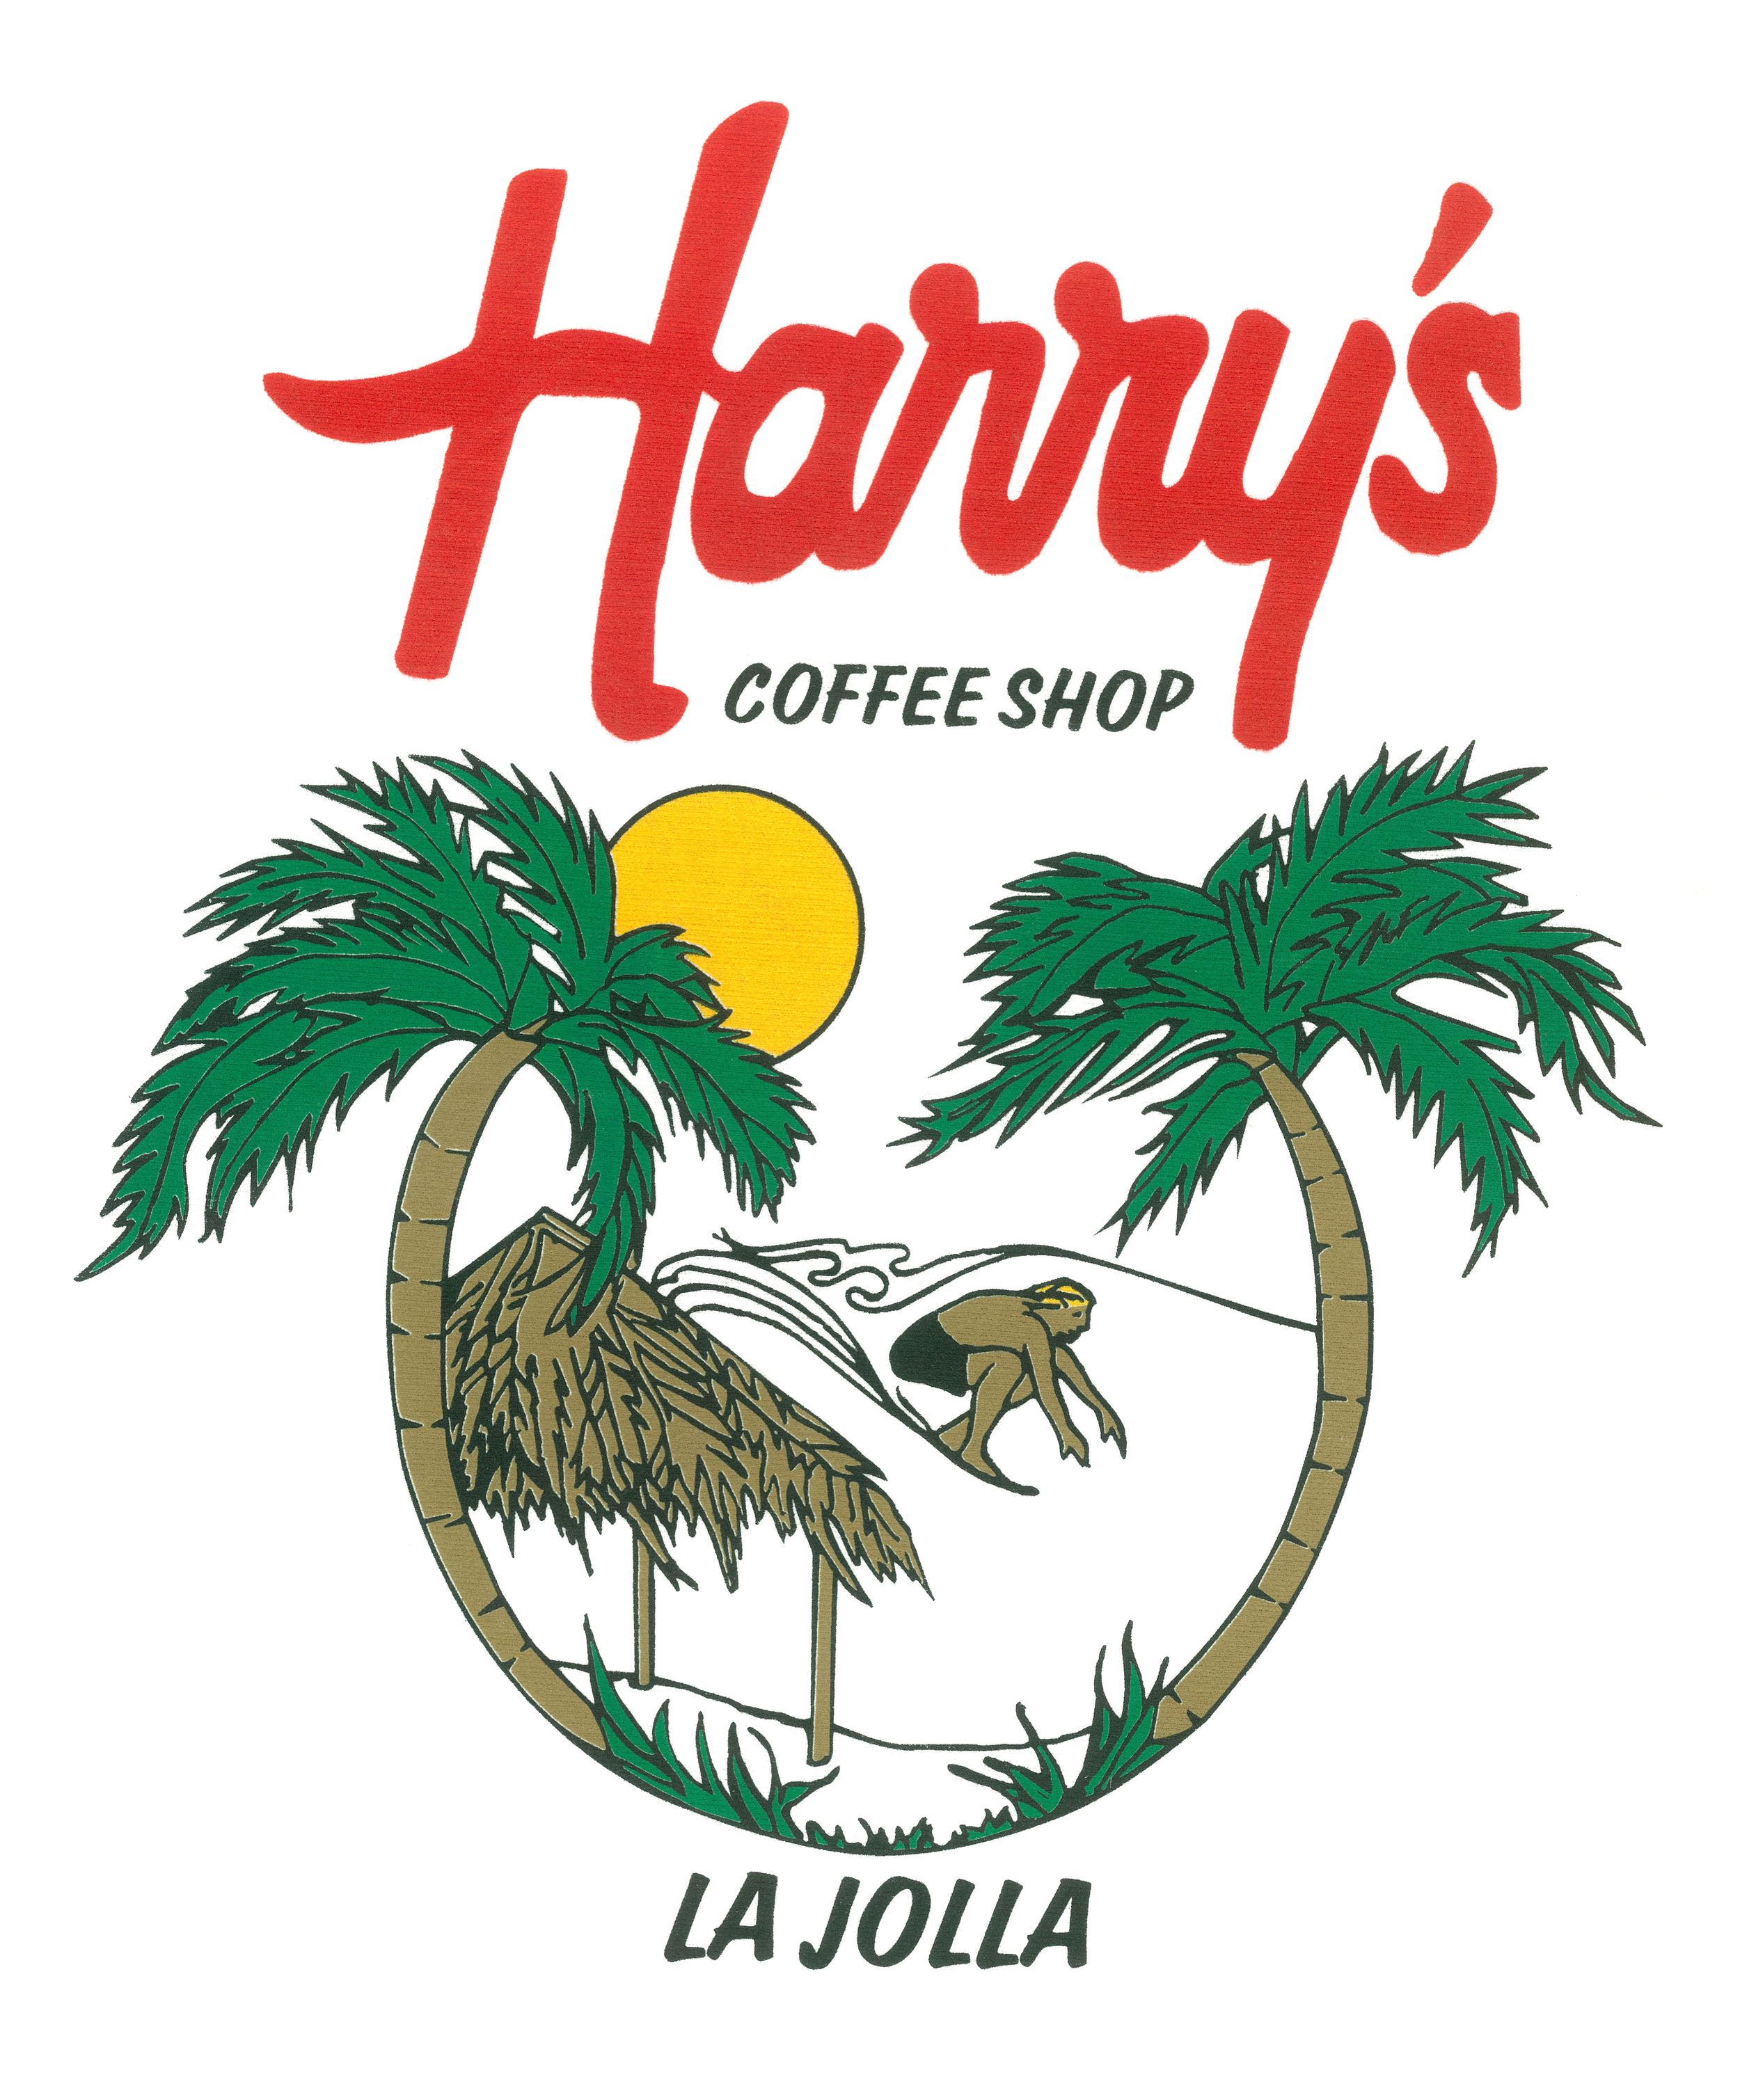 Breakfast and Lunch Restaurant in La Jolla, CA- Harry's Coffee Shop